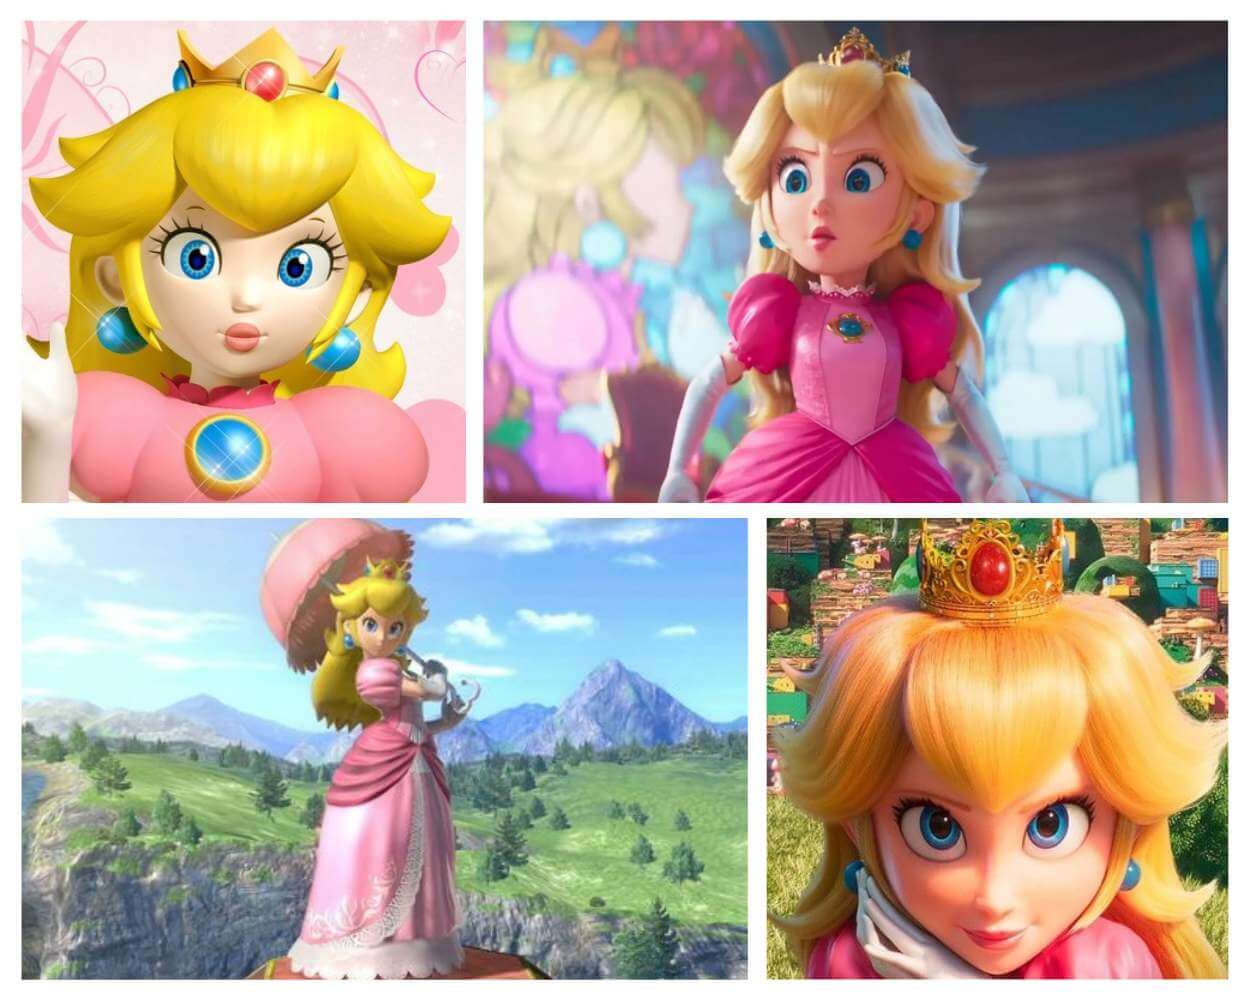 Princess Peach - Female Mario Characters